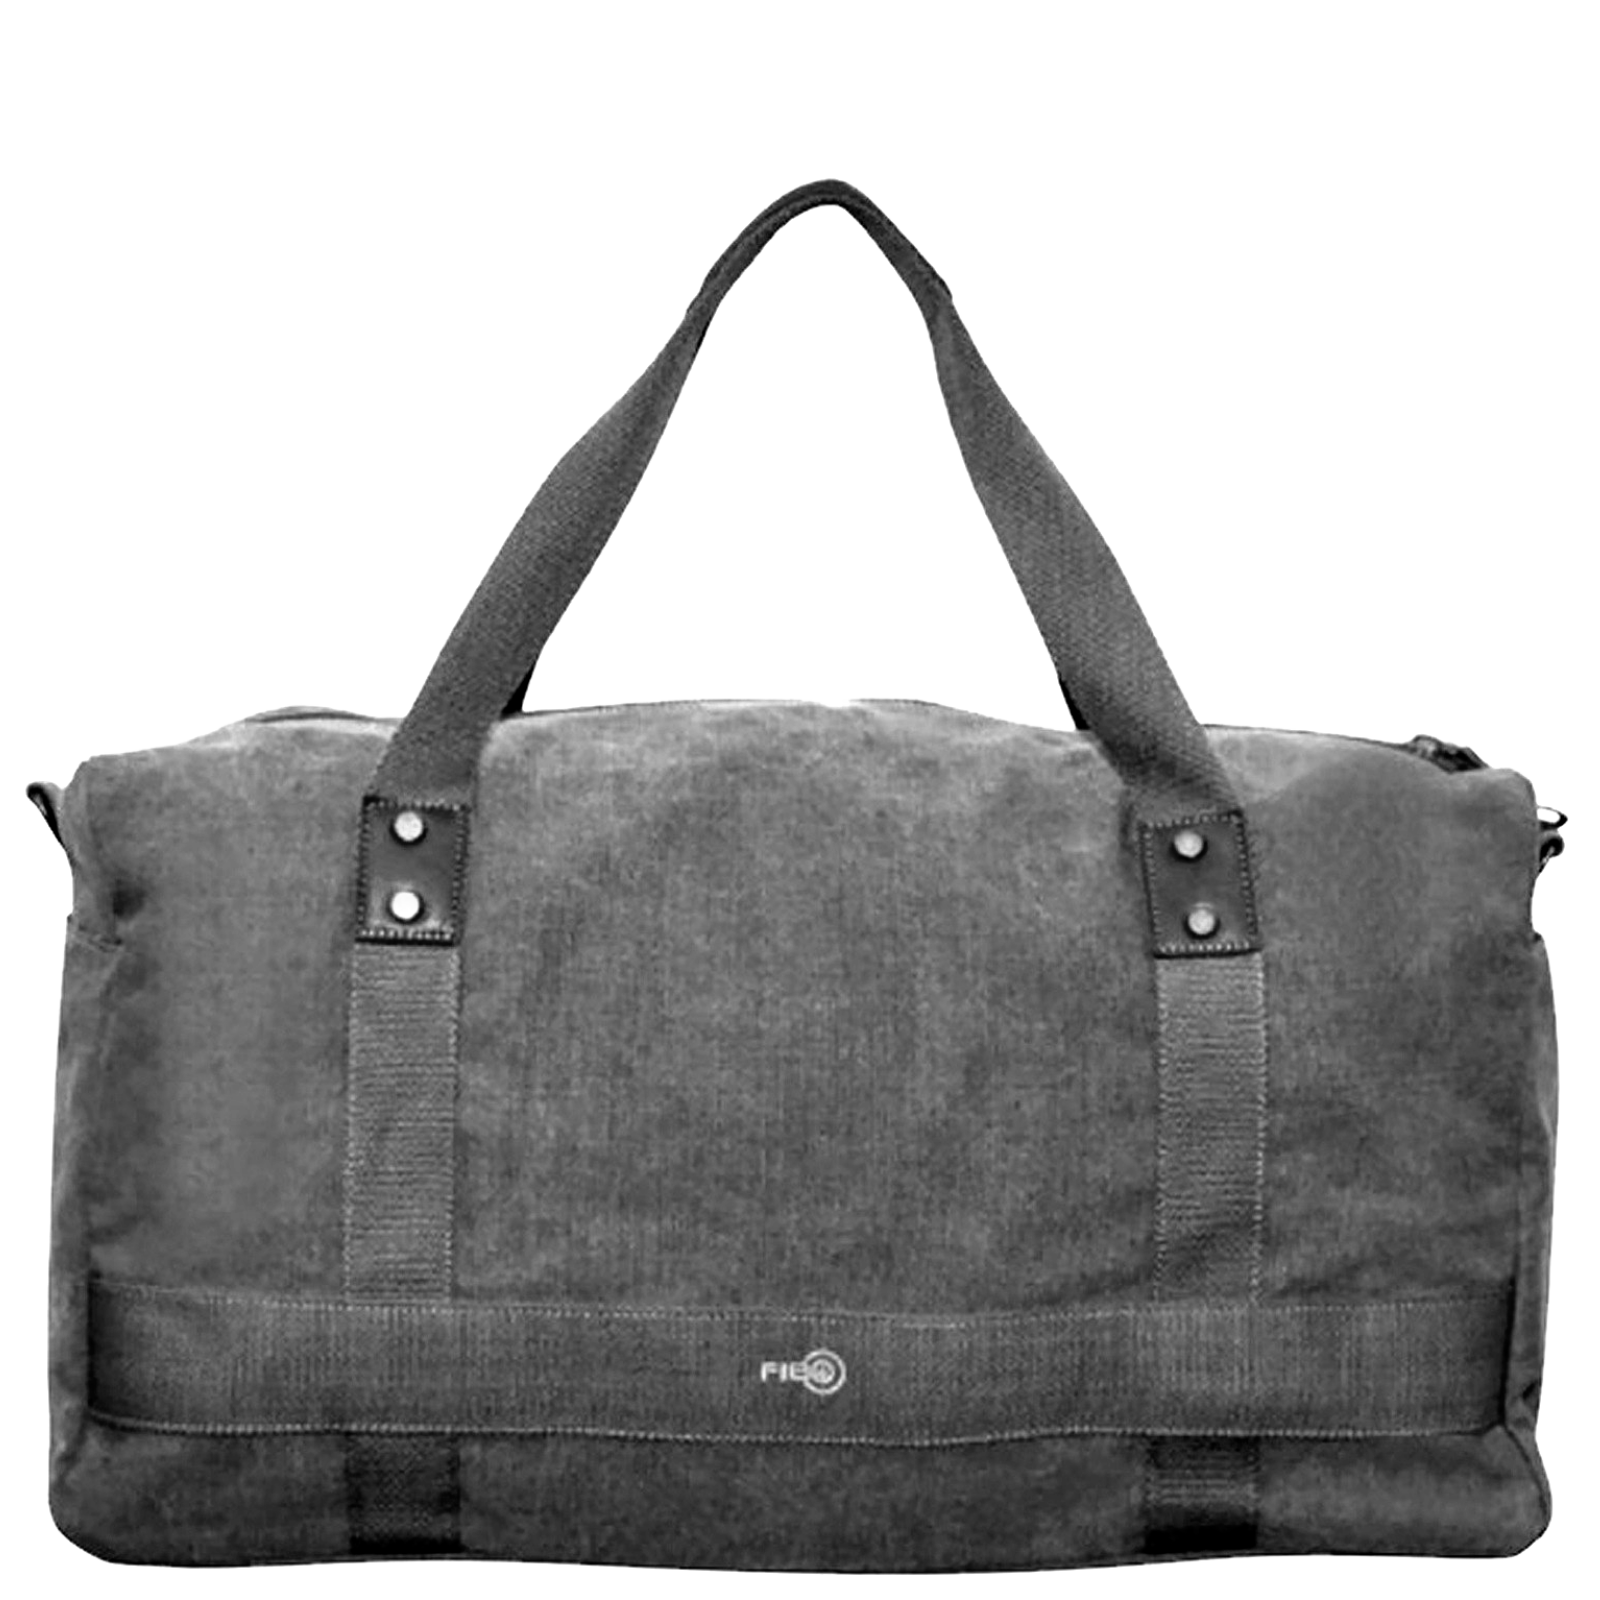 52cm Canvas Travel Duffle Bag Casual Duffel - Black